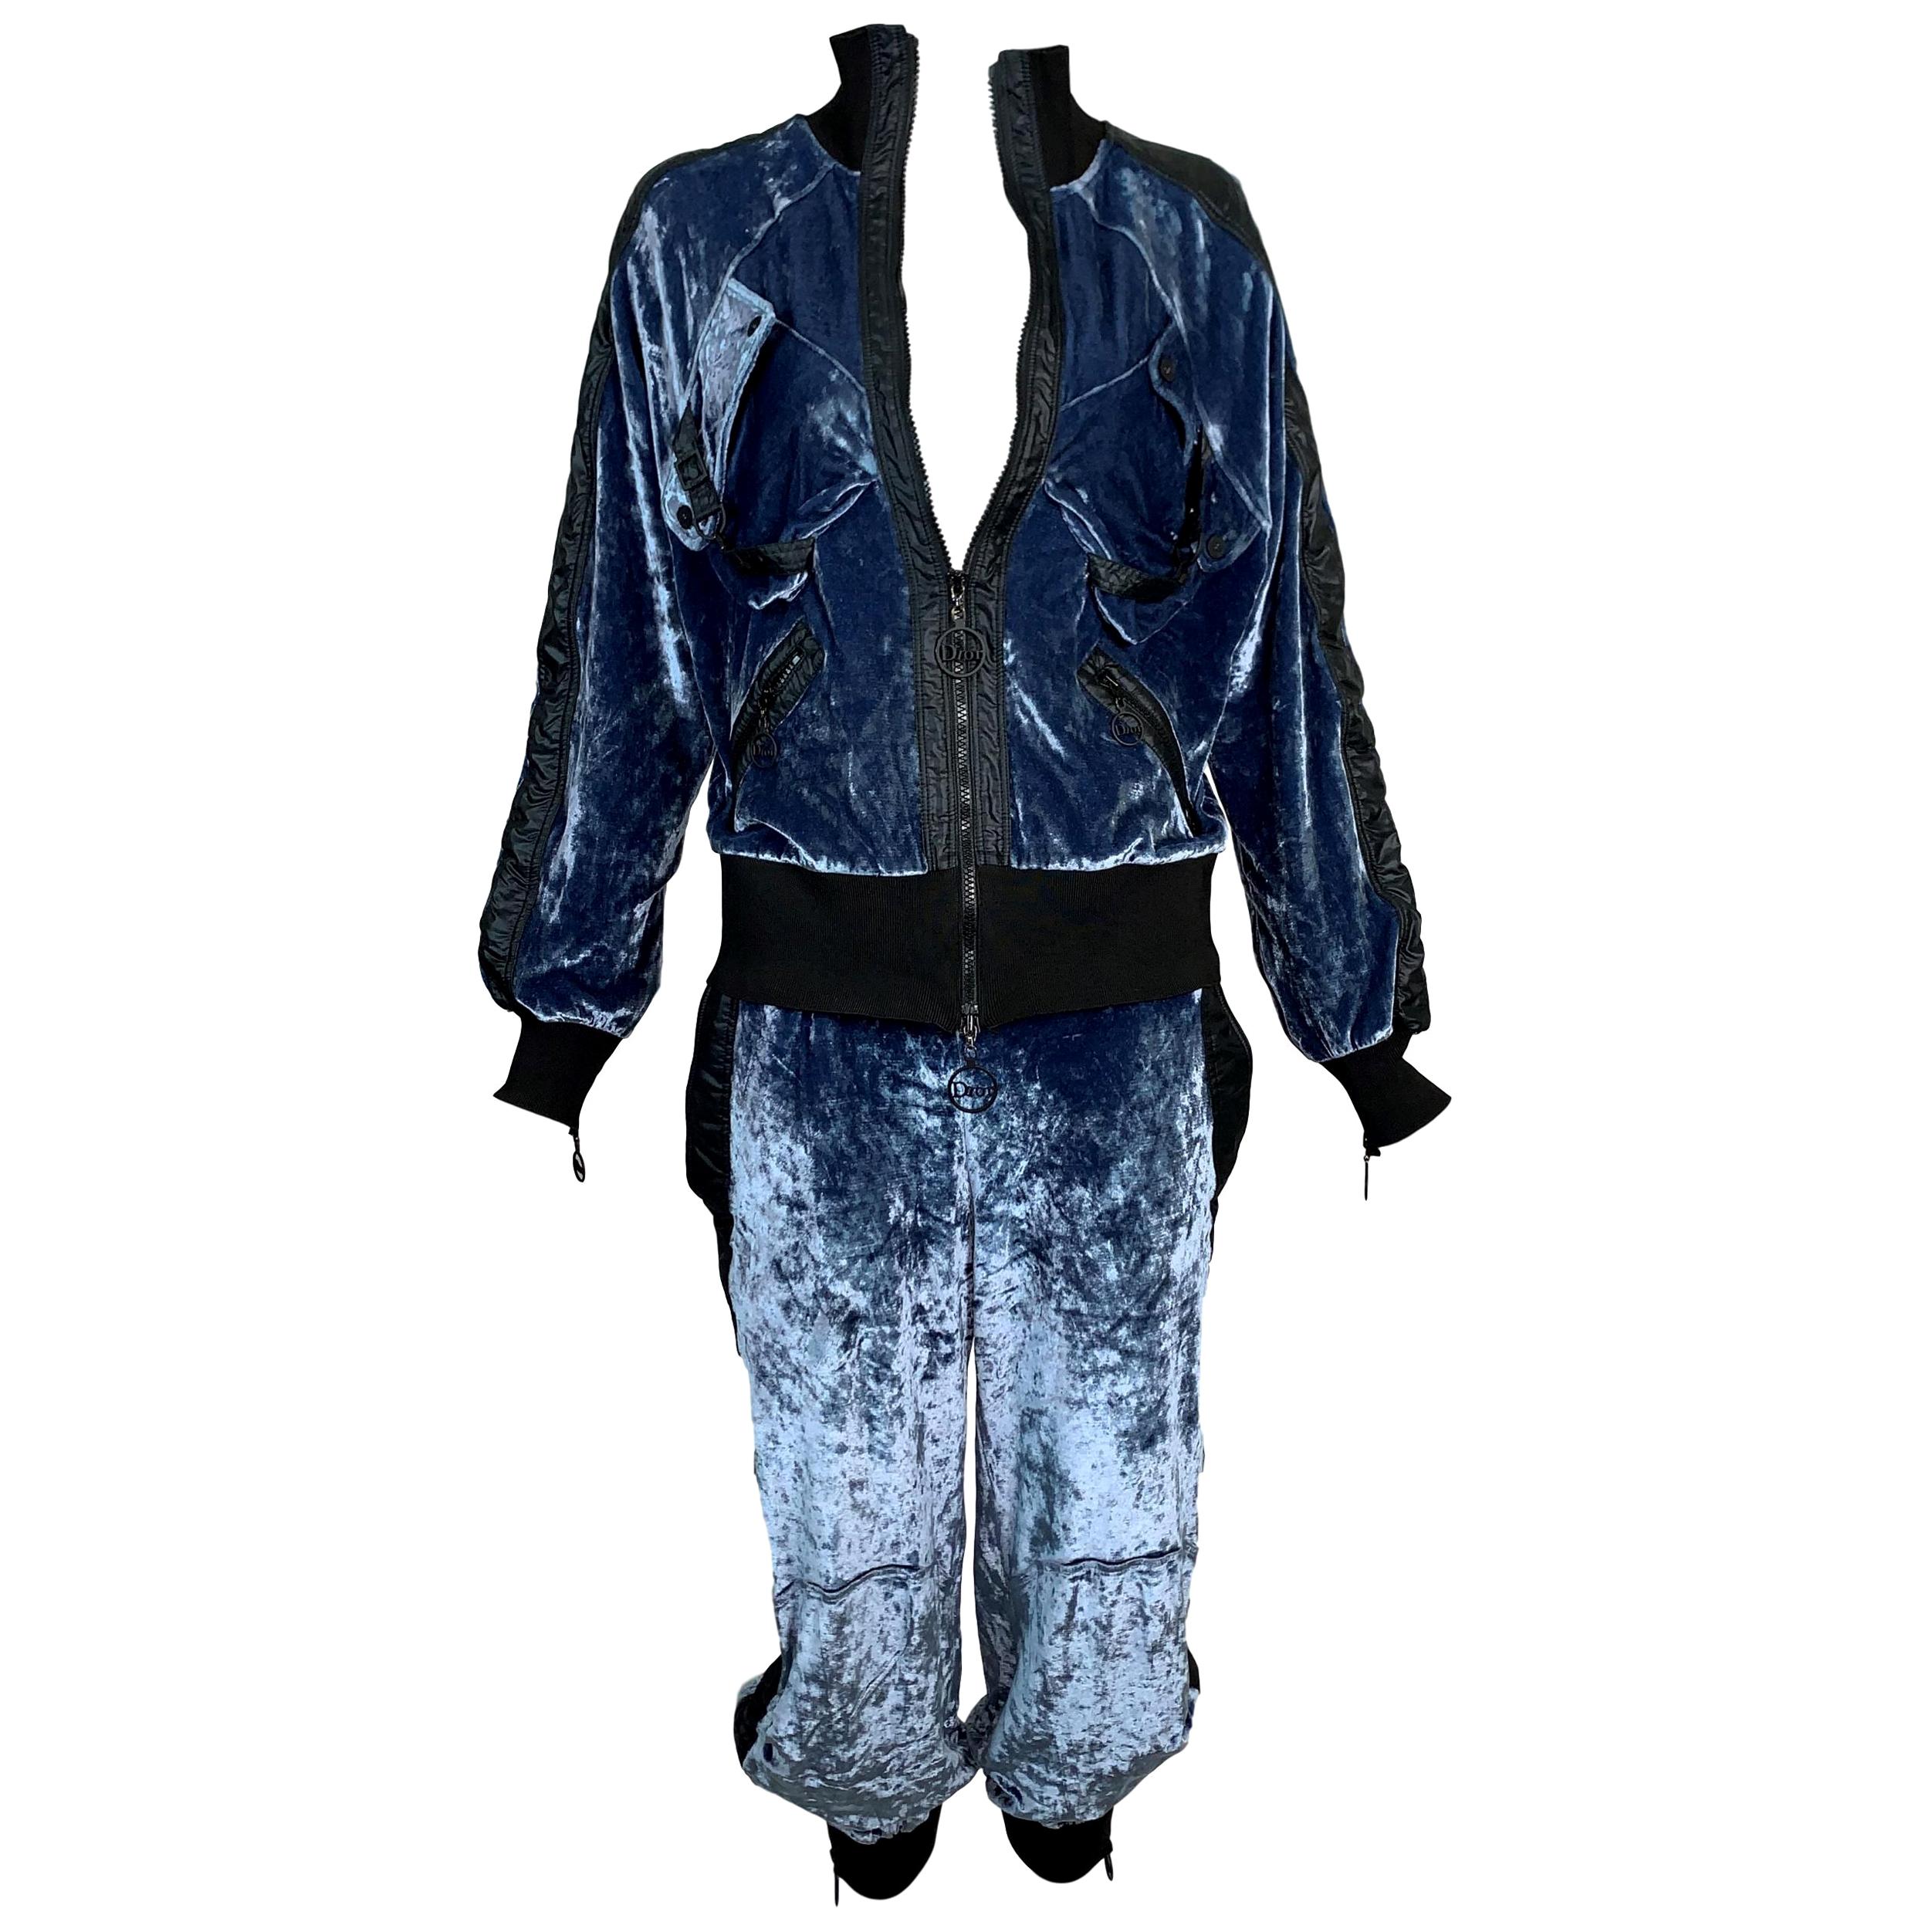 S/S 2004 Christian Dior John Galliano Blue Velvet Jacket & Pants Tracksuit